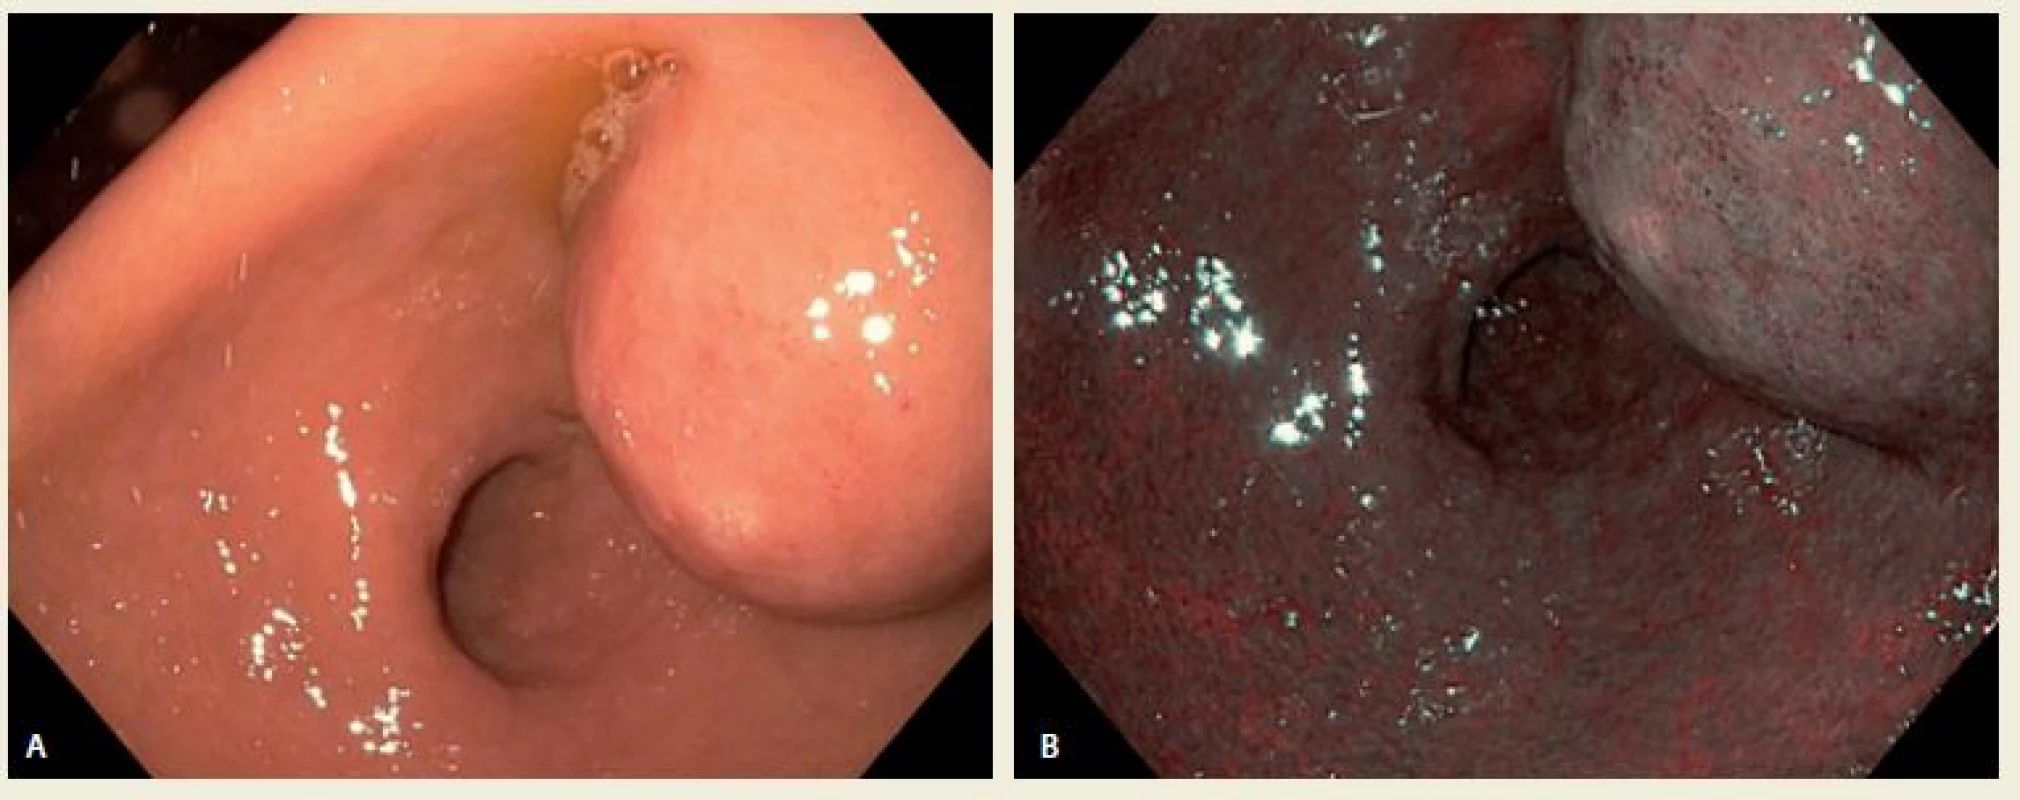 A,B. Gastroskopický obraz a – v normálním světle a b – pod NBI (Narrow Band Imaging).<br>
Fig. A,B. Antral intramural tumor in normal and NBI (Narrow Band Imaging).